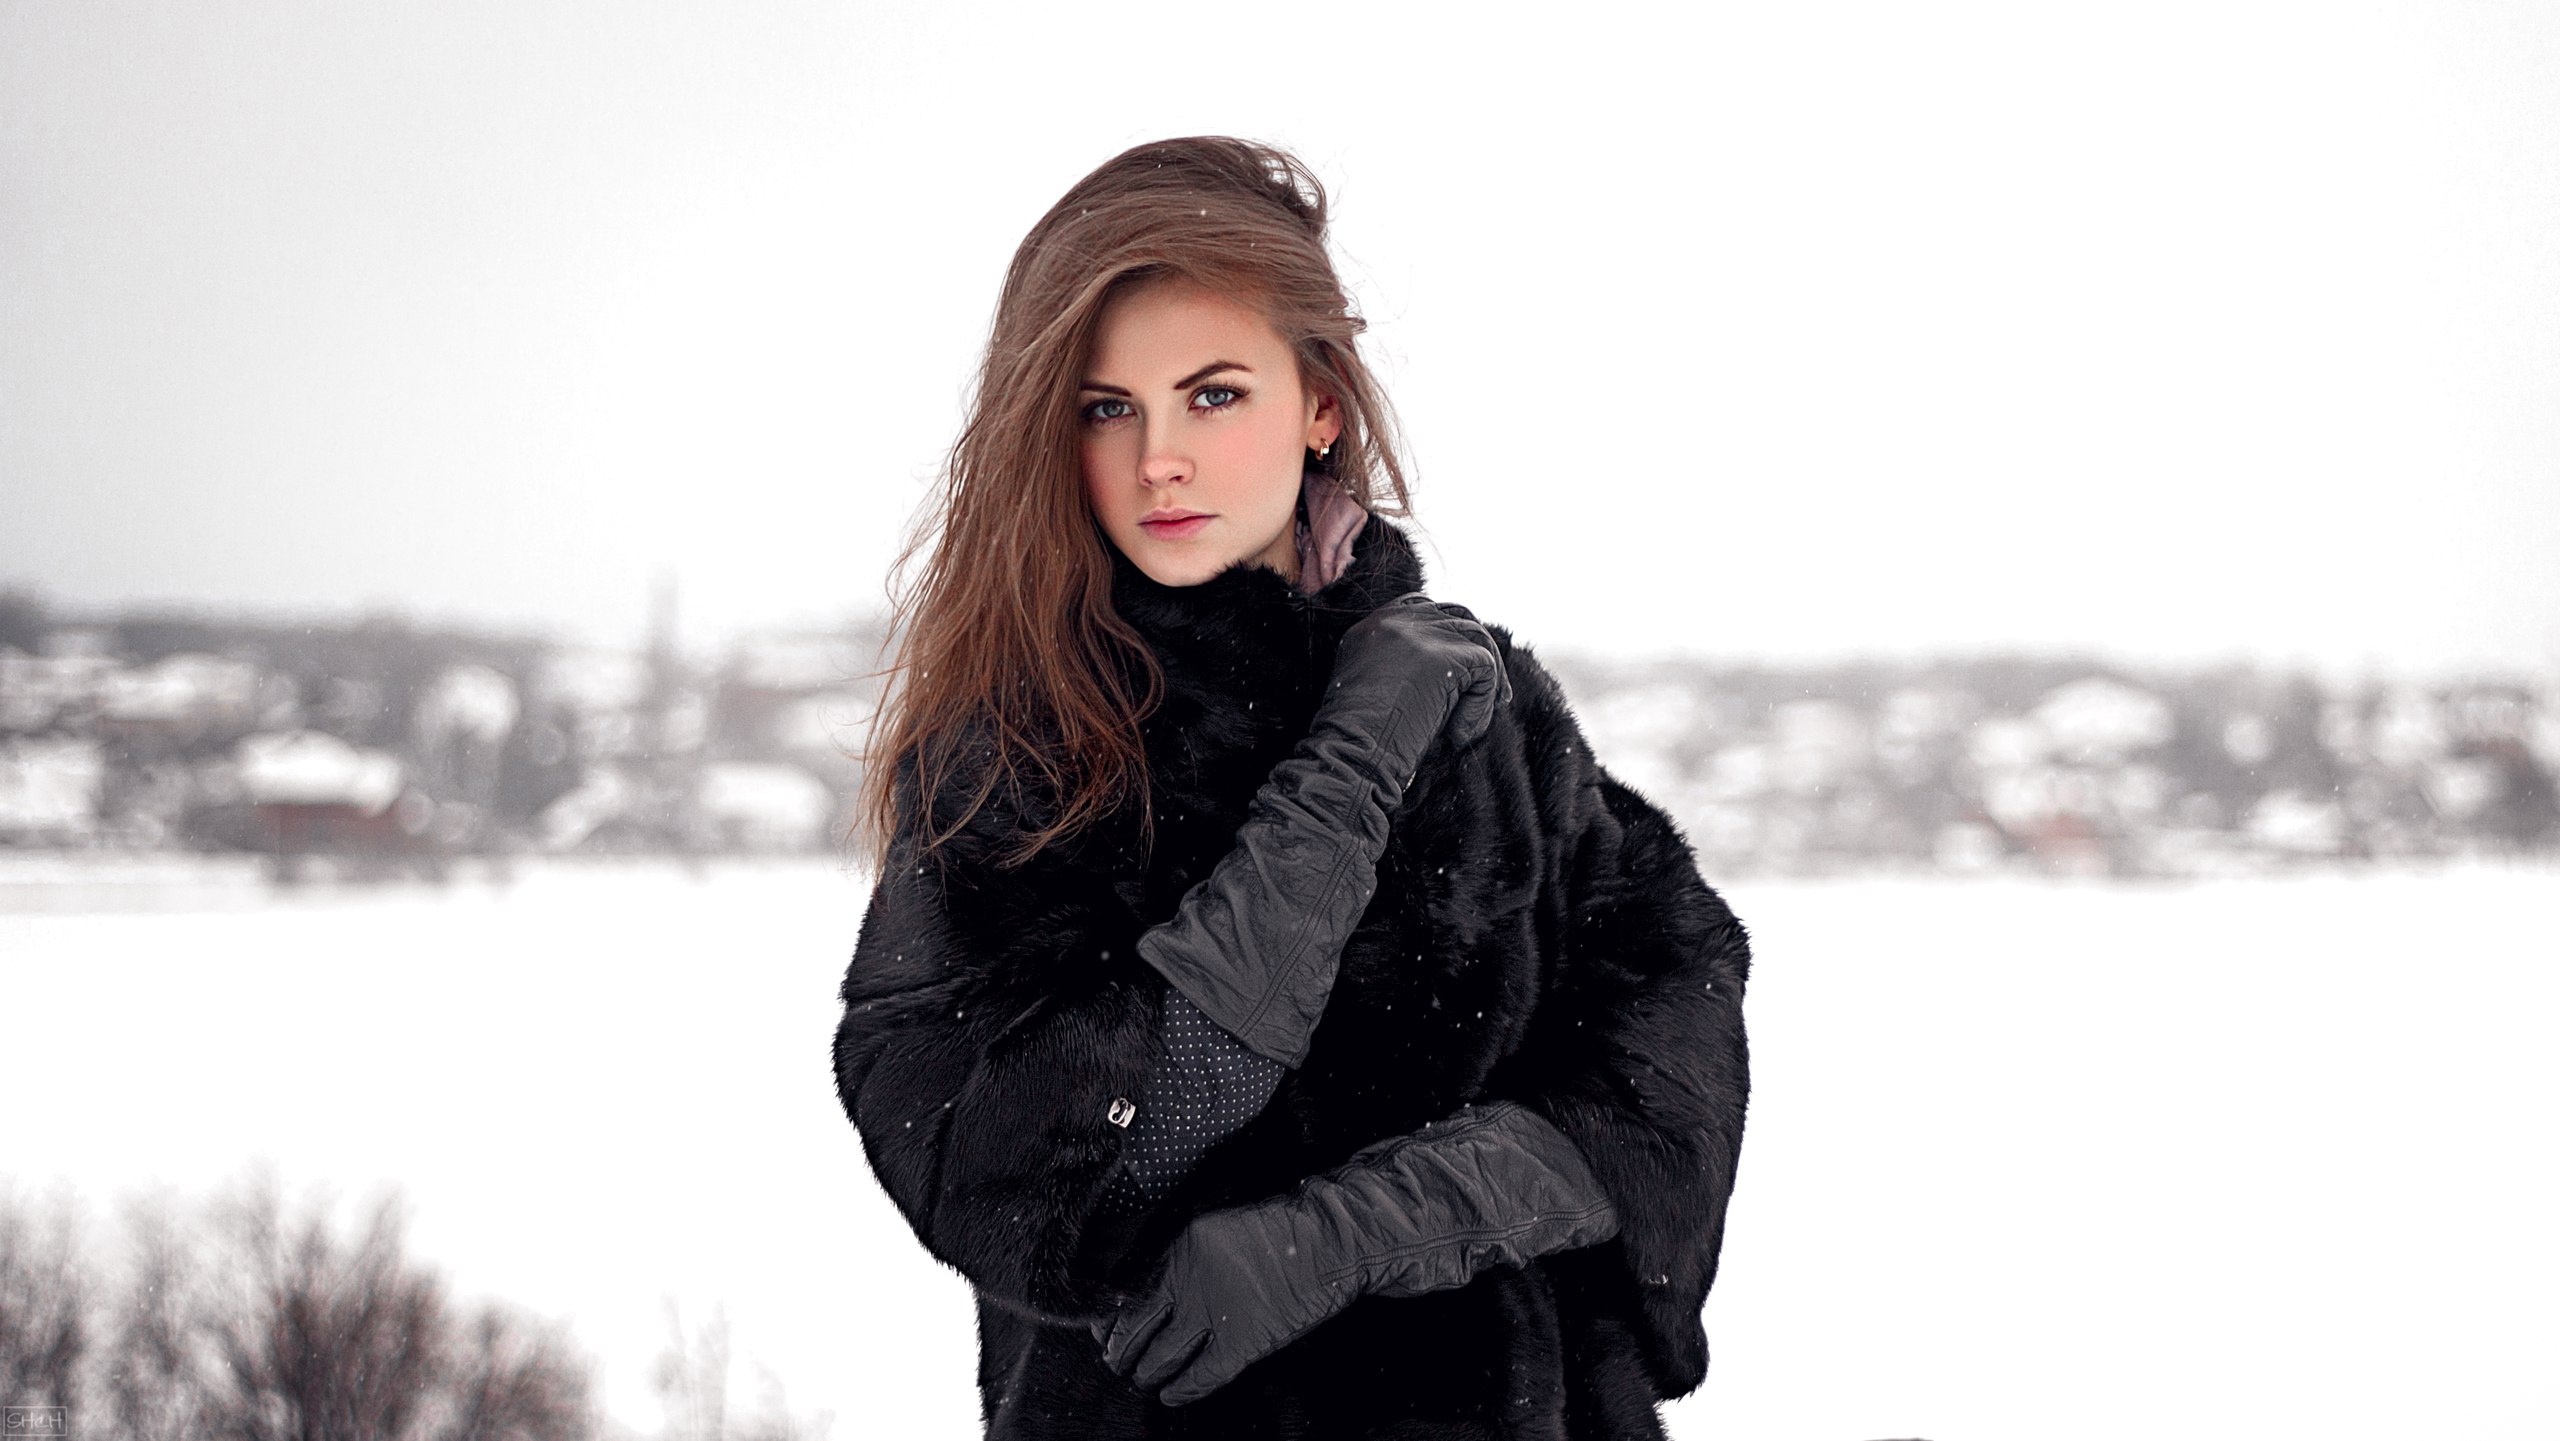 Wallpaper, snow, winter, cold, model, women outdoors, long hair, portrait 2560x1441